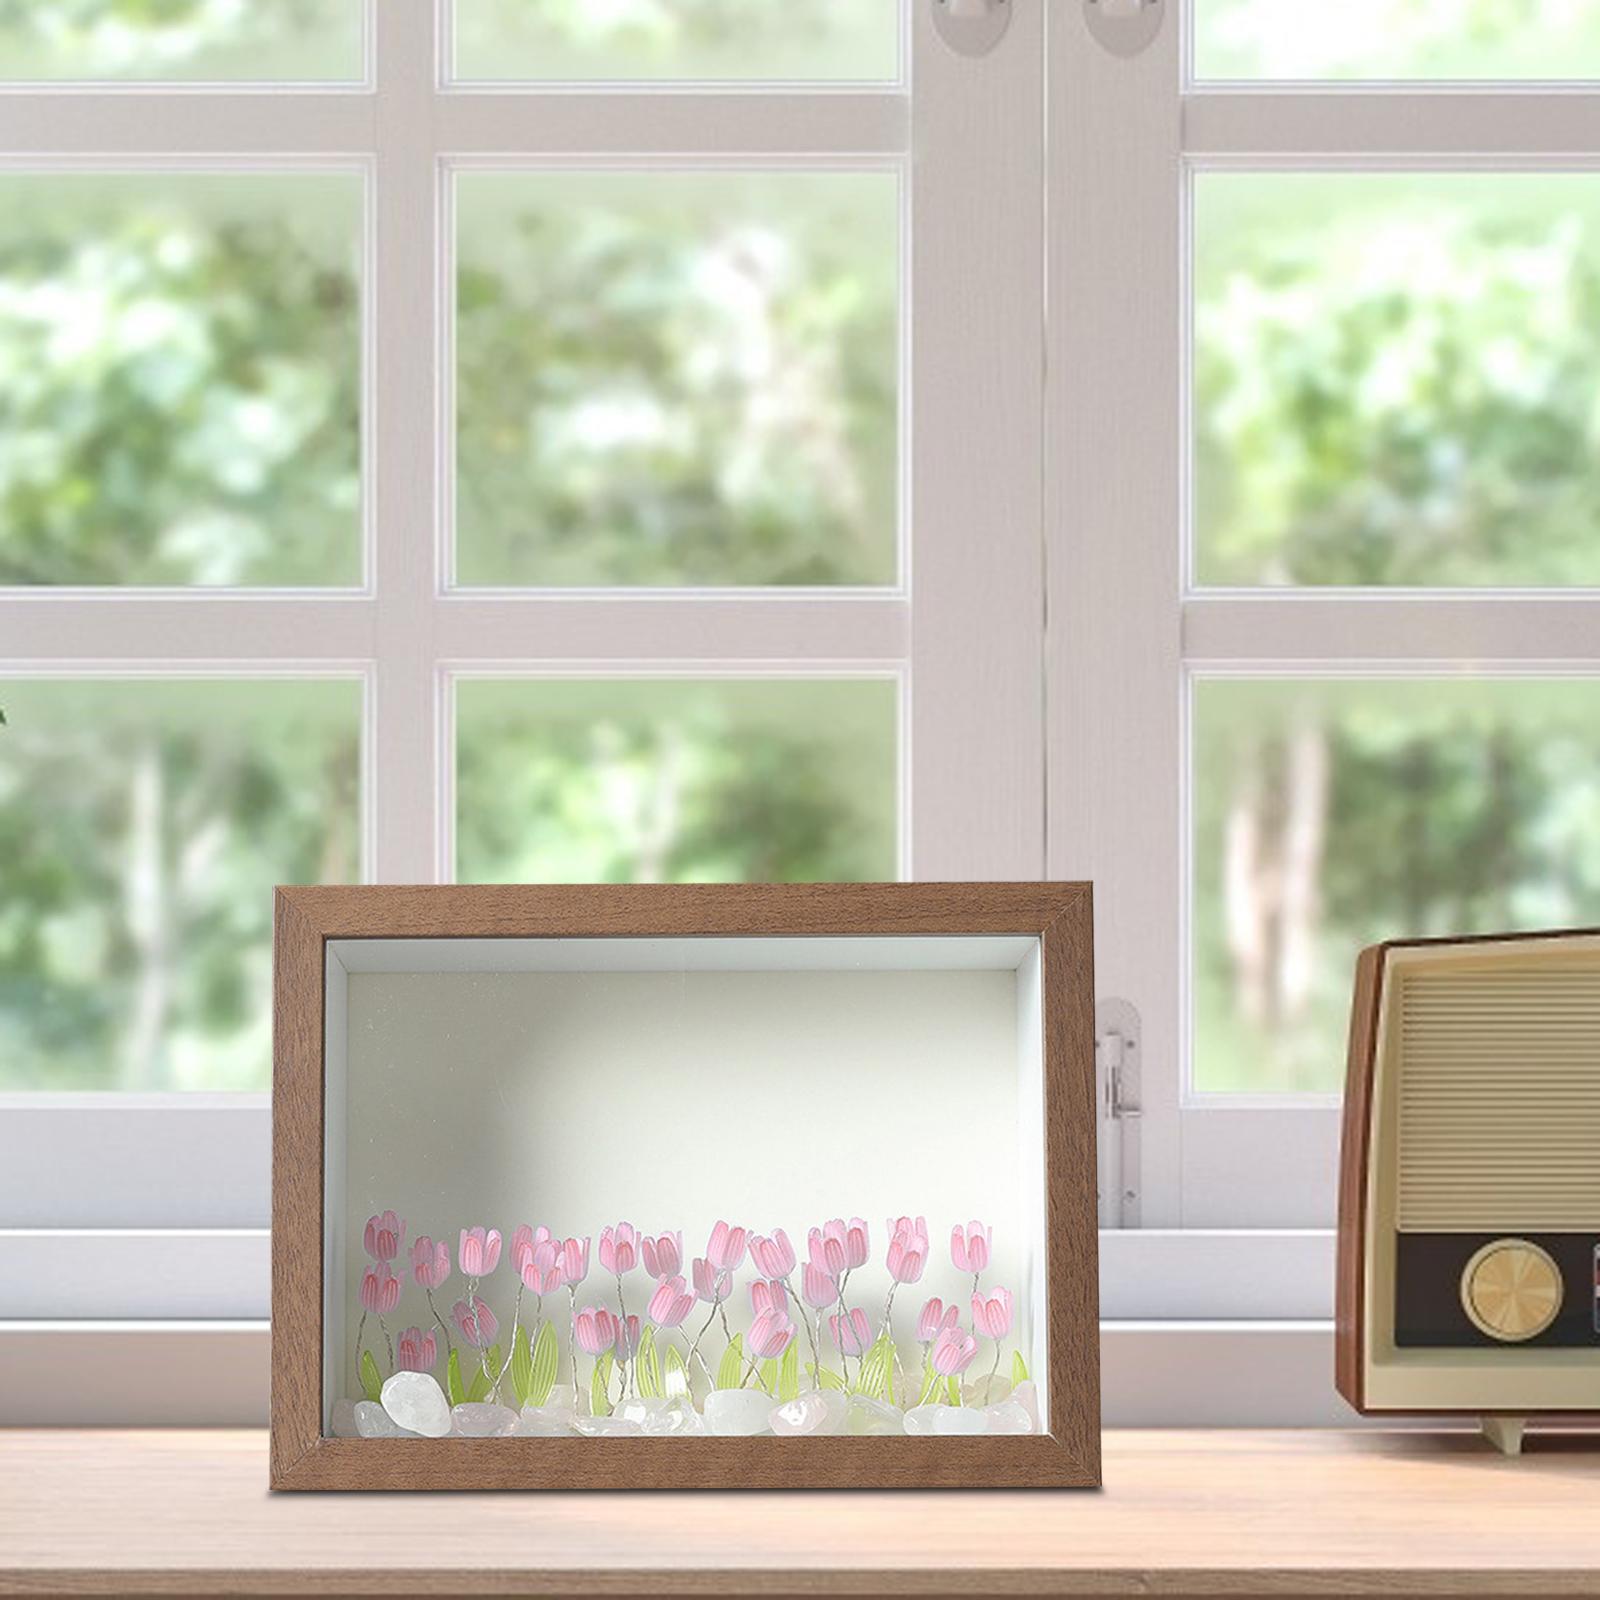 DIY Photo Frame Night Light Decorative Housewarming Gift Wooden Frames